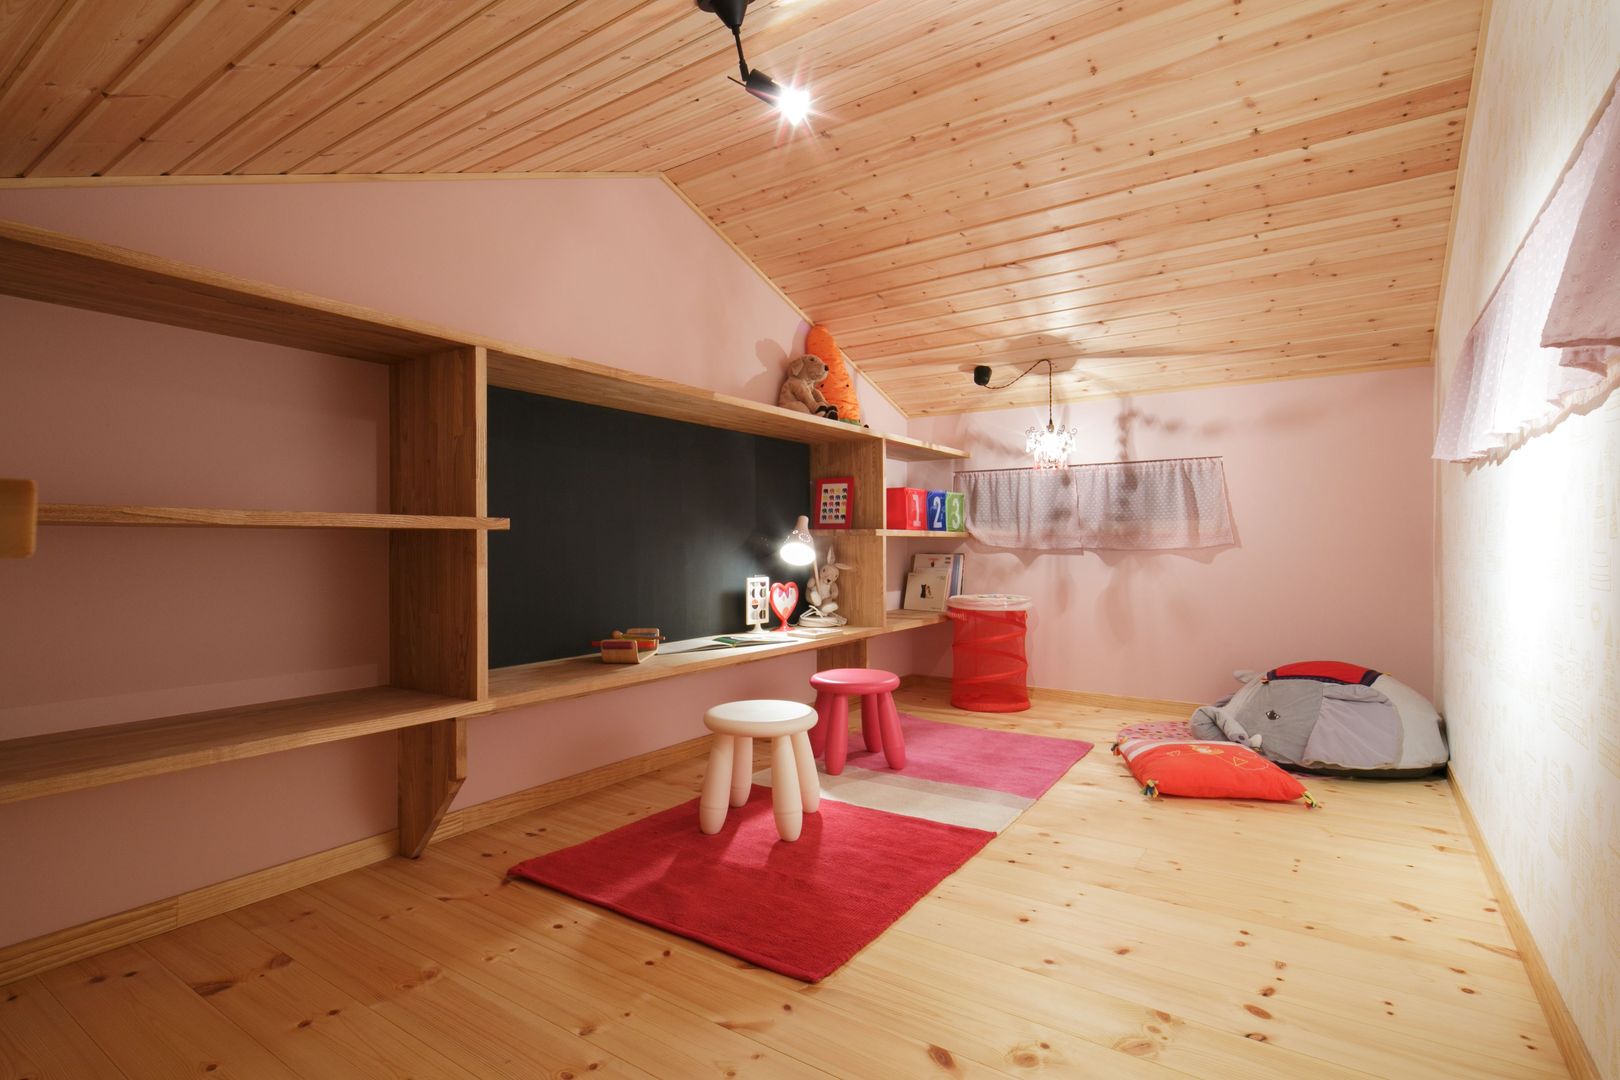 H's HOUSE, dwarf dwarf 北欧デザインの 子供部屋